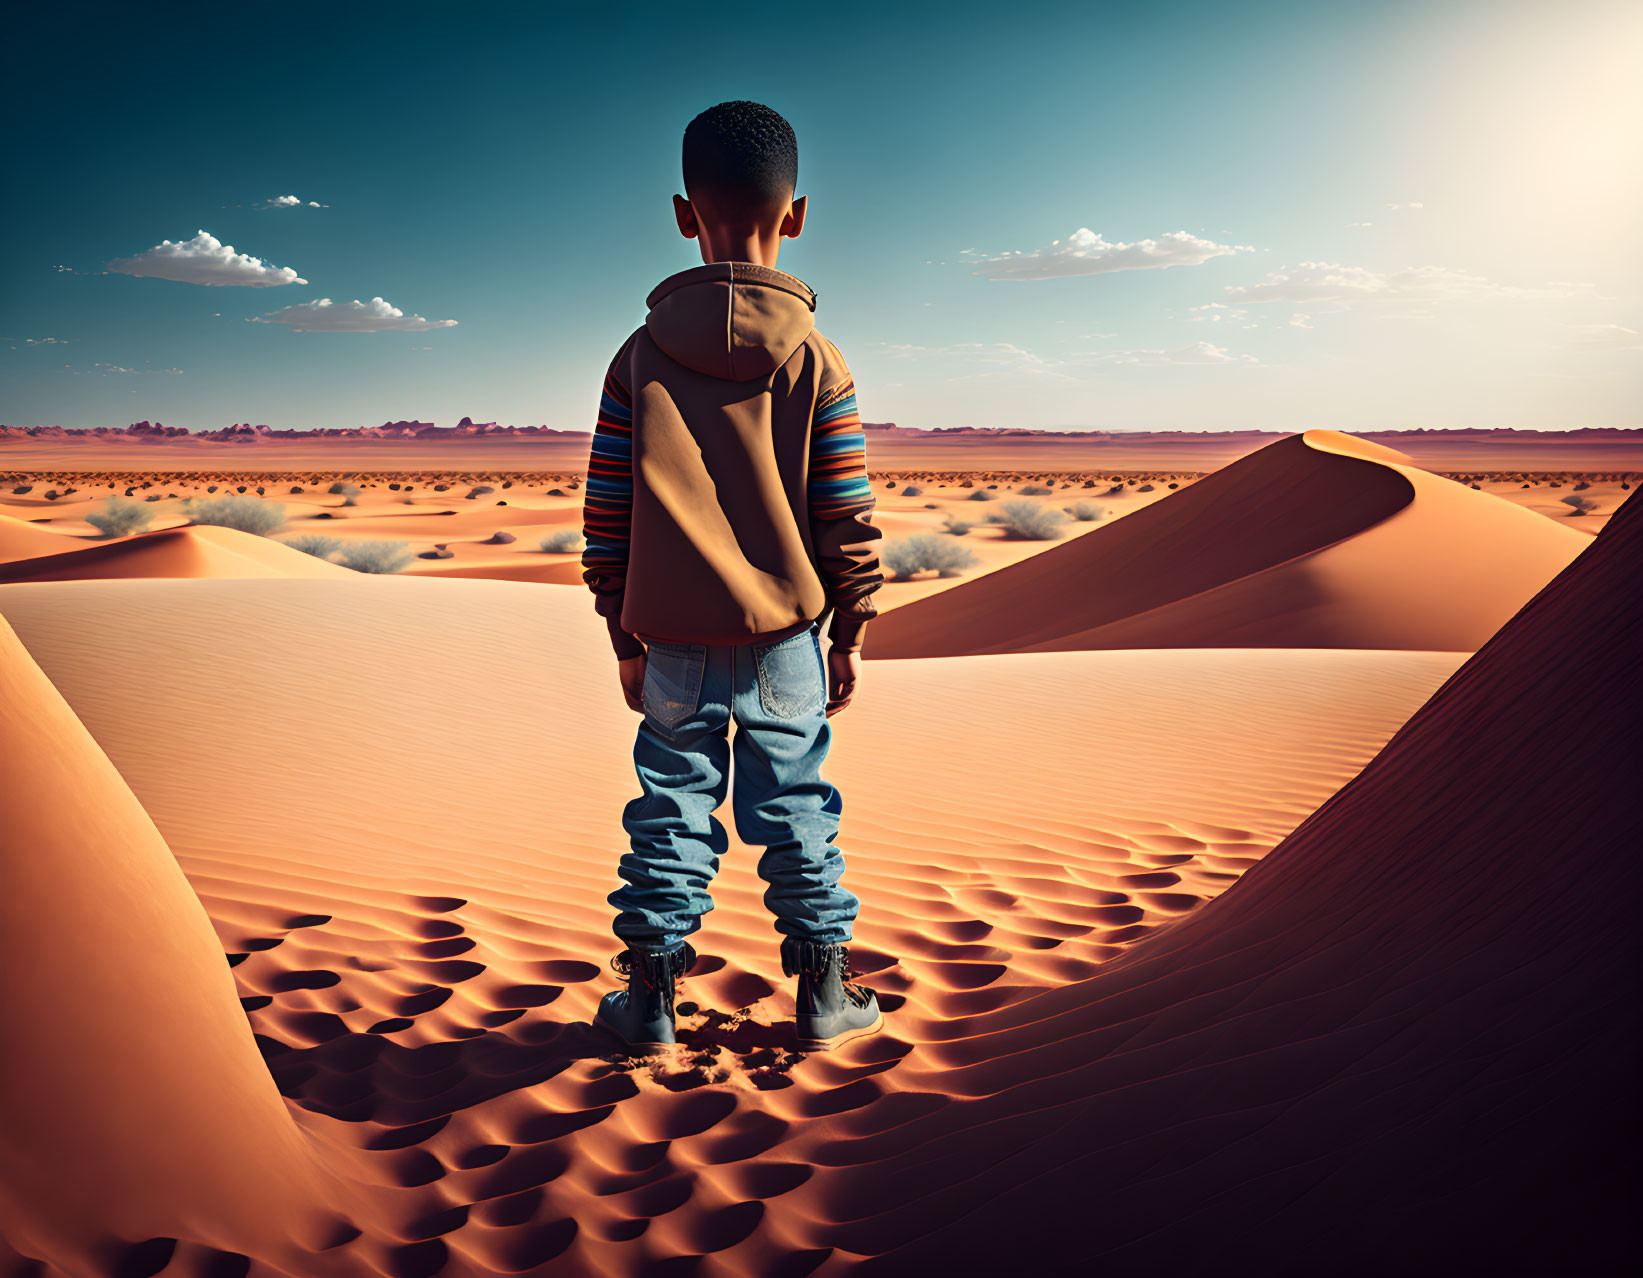 A Boy in Desert 